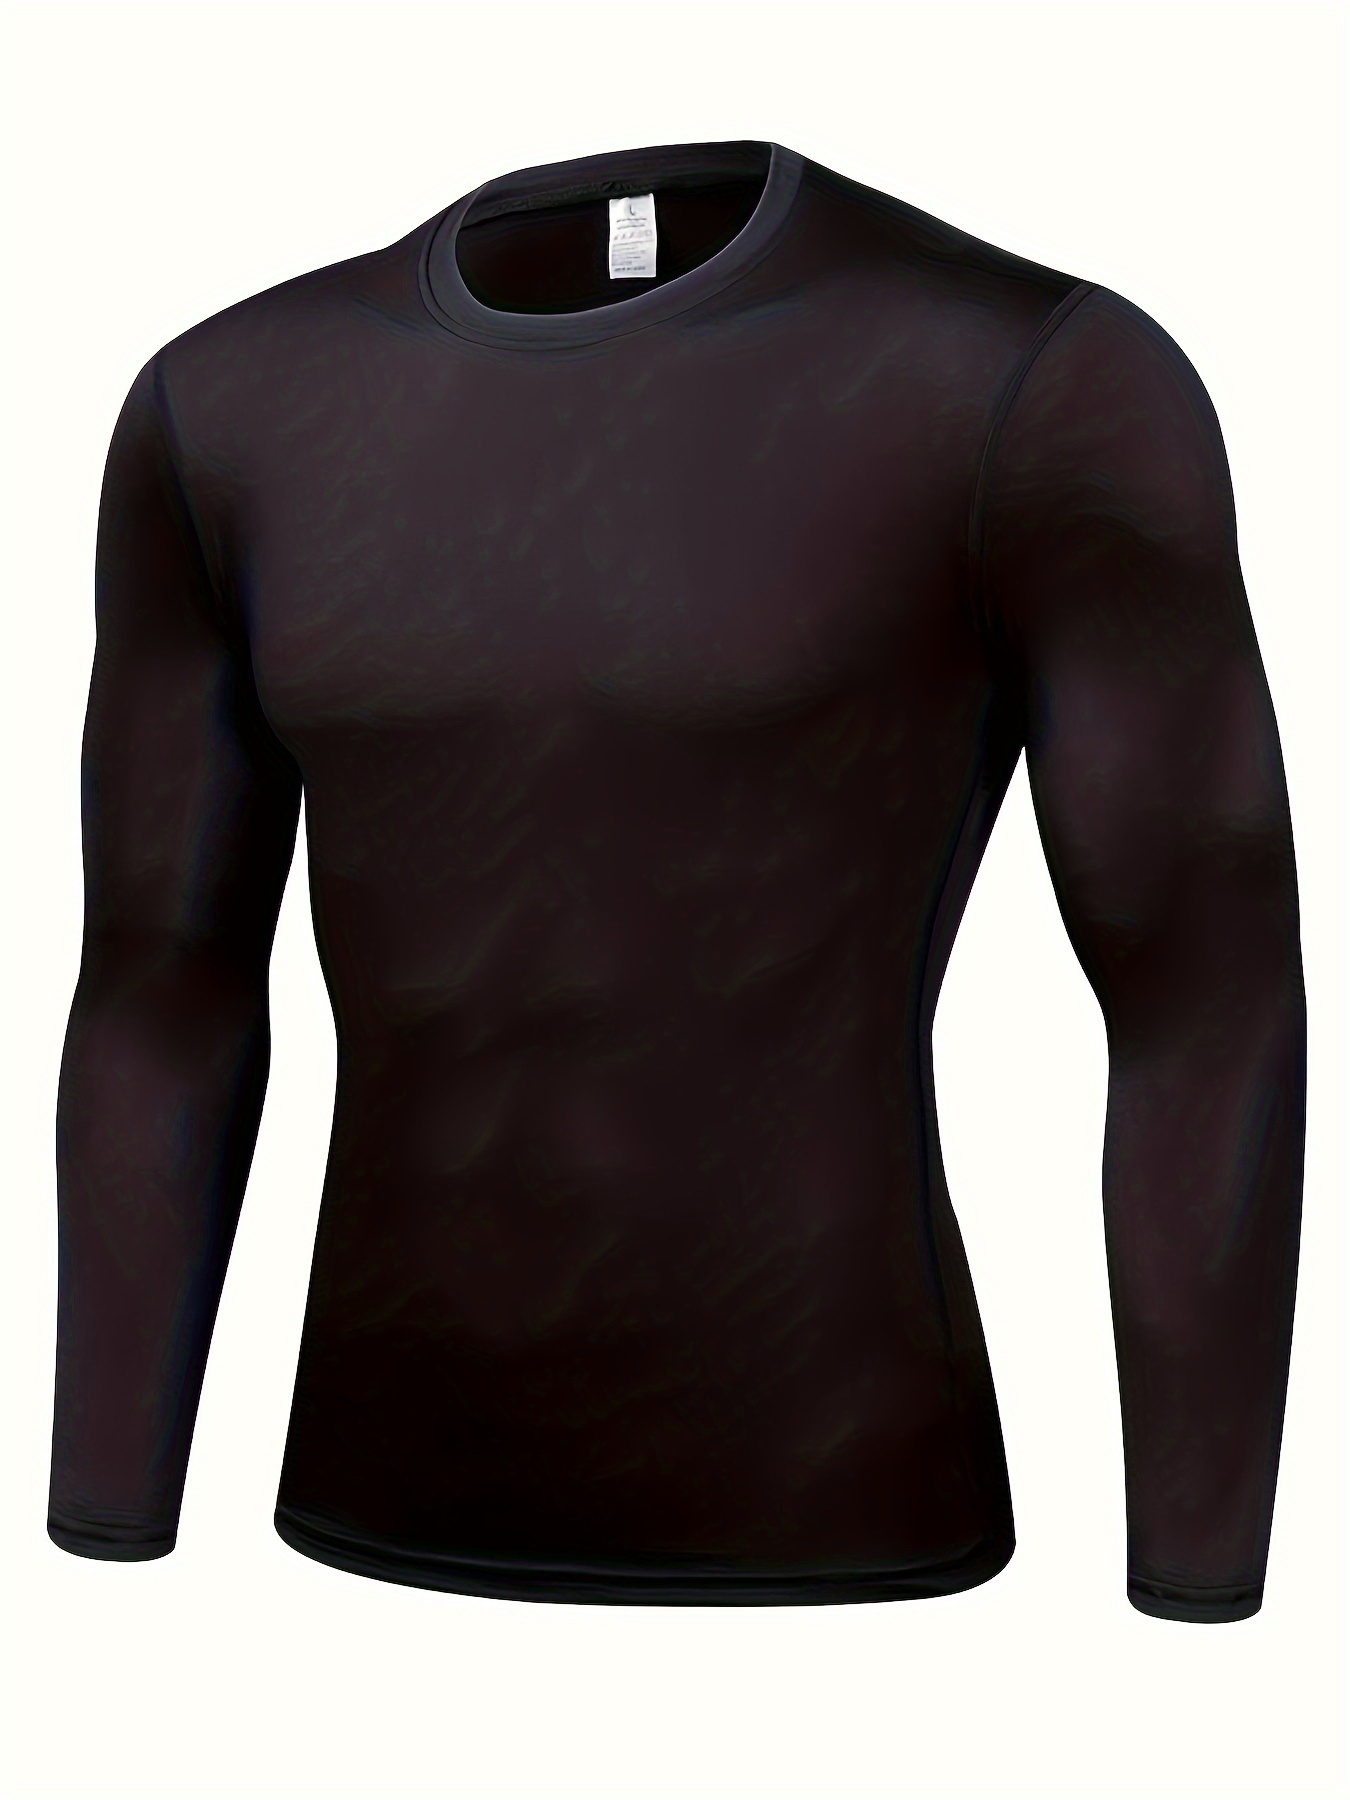  Milin Naco Compression Shirts for Men Long Sleeve